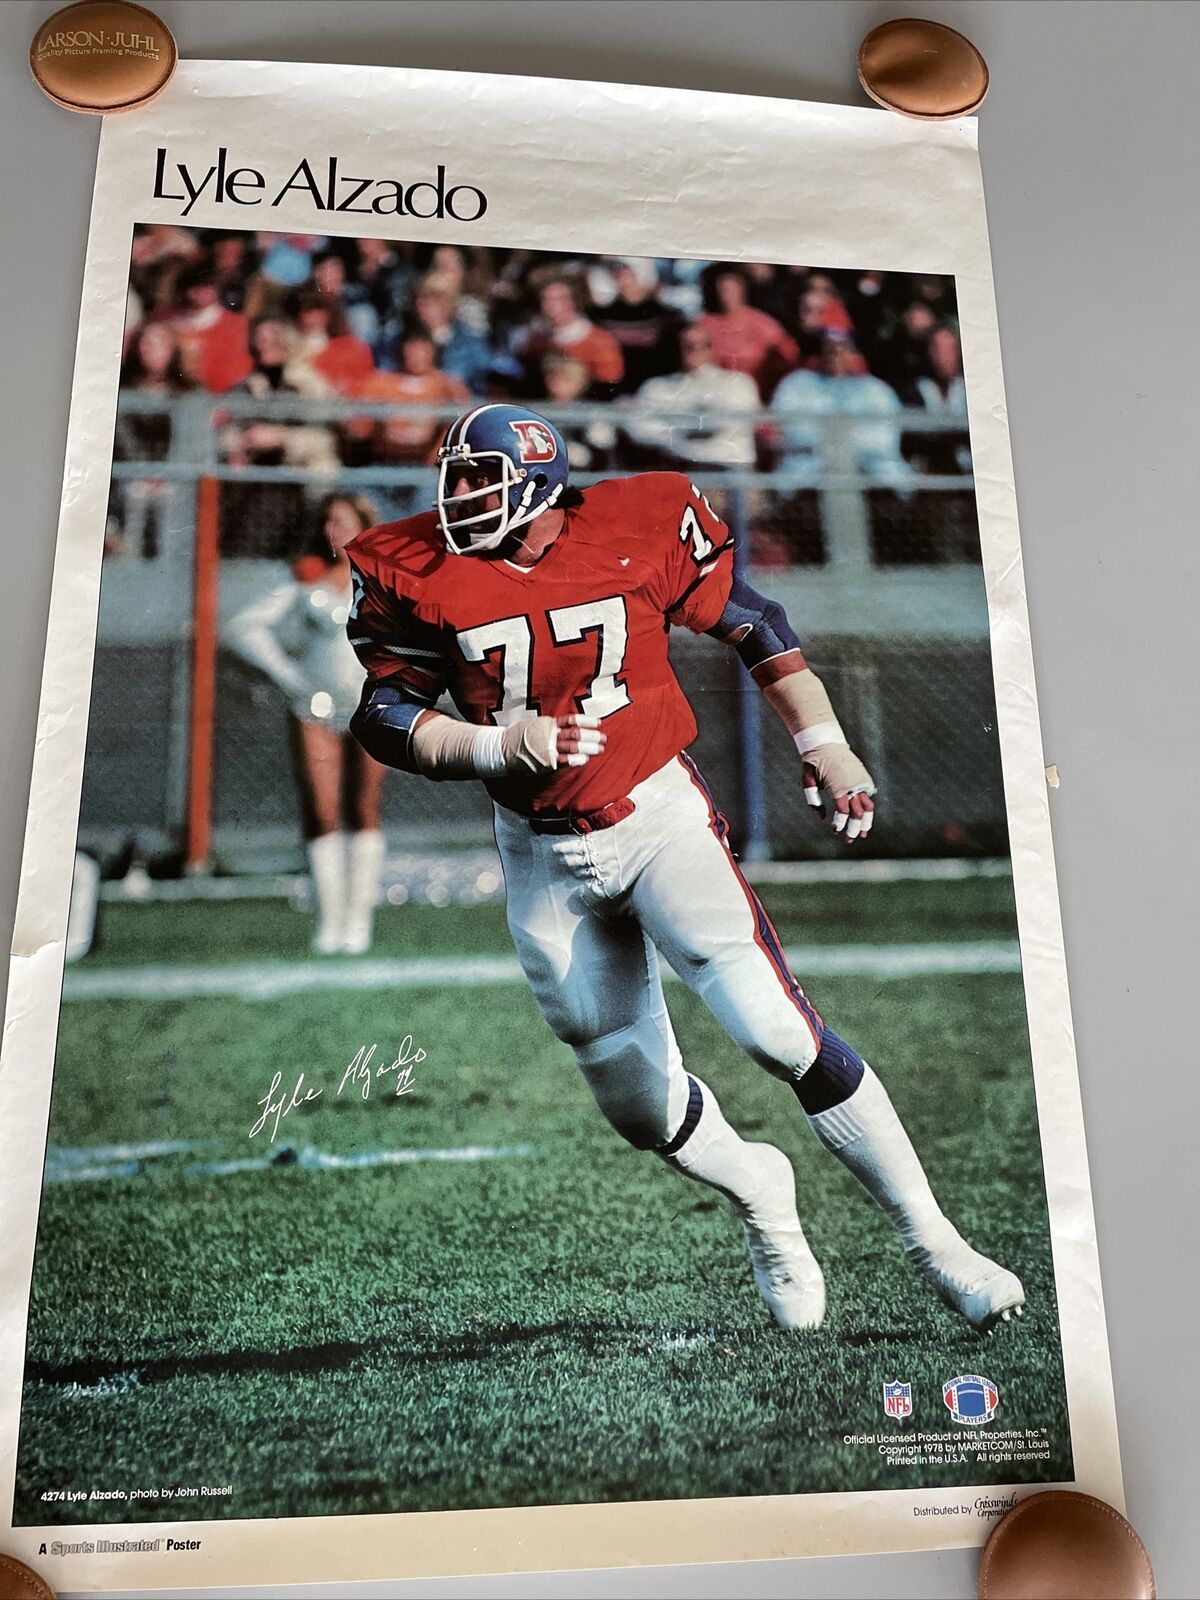 Lyle Alzado 1978 Sports Illustrated Poster - Denver Broncos